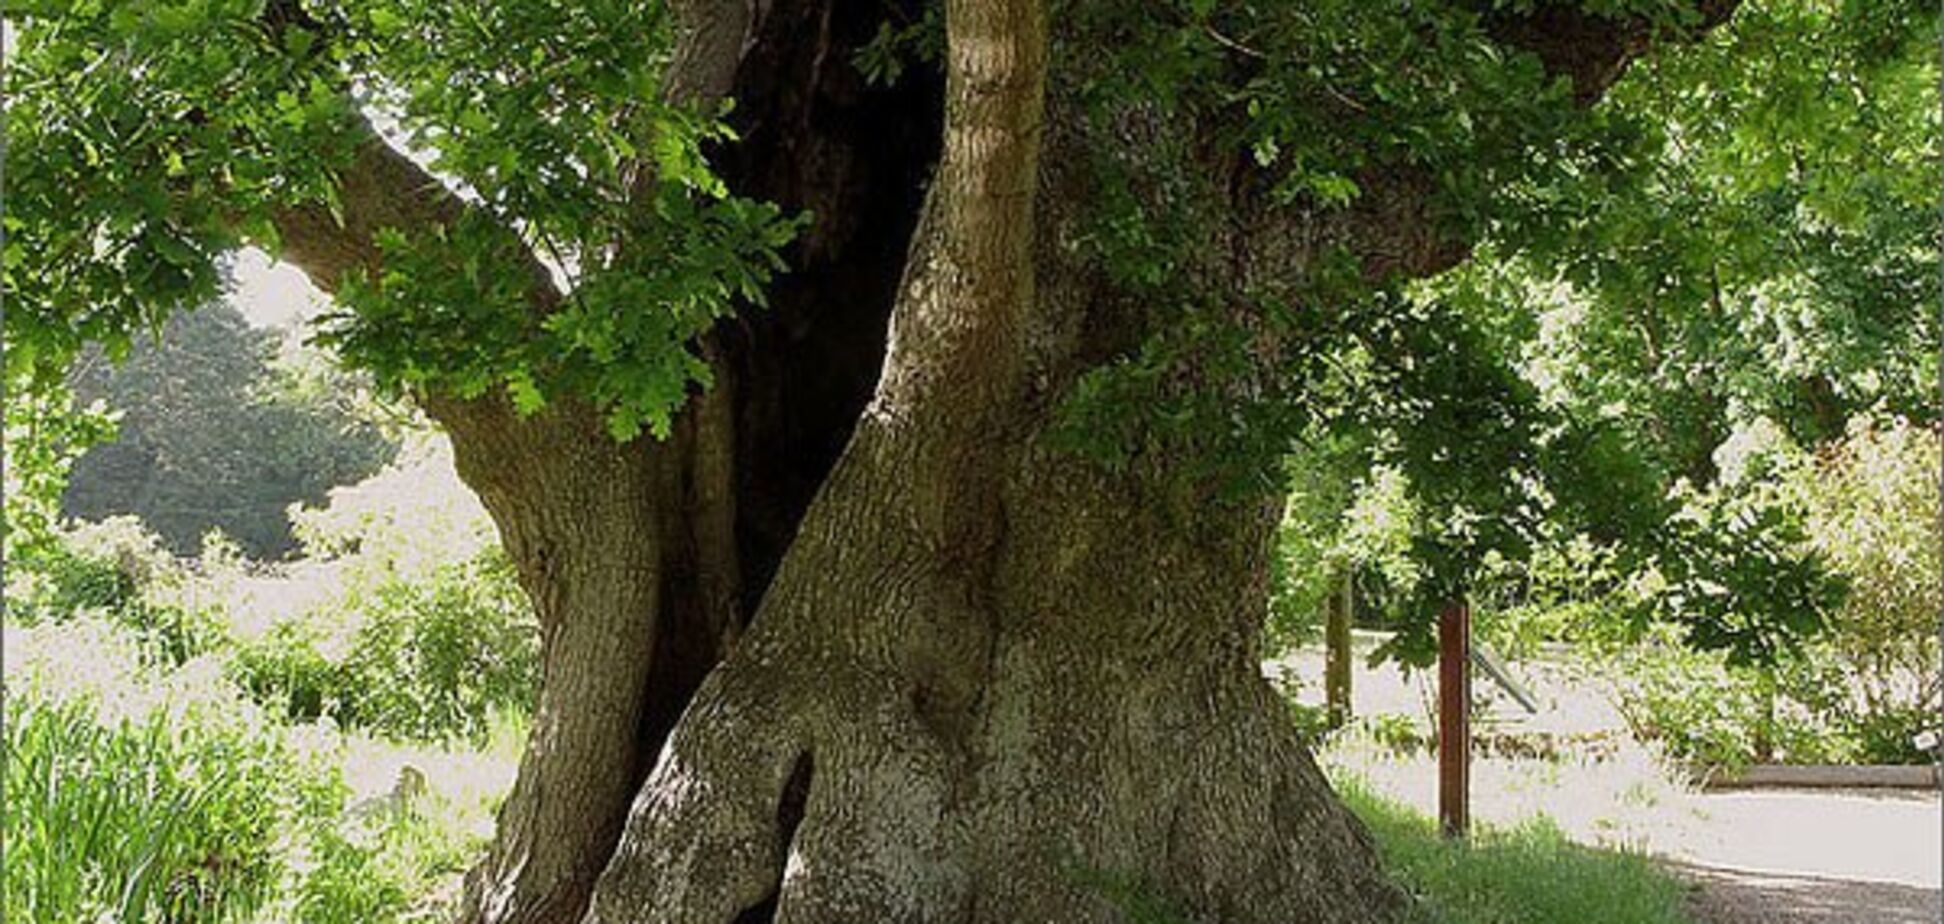  Деревья чахнут: на Закарпатье назрела экокатастрофа